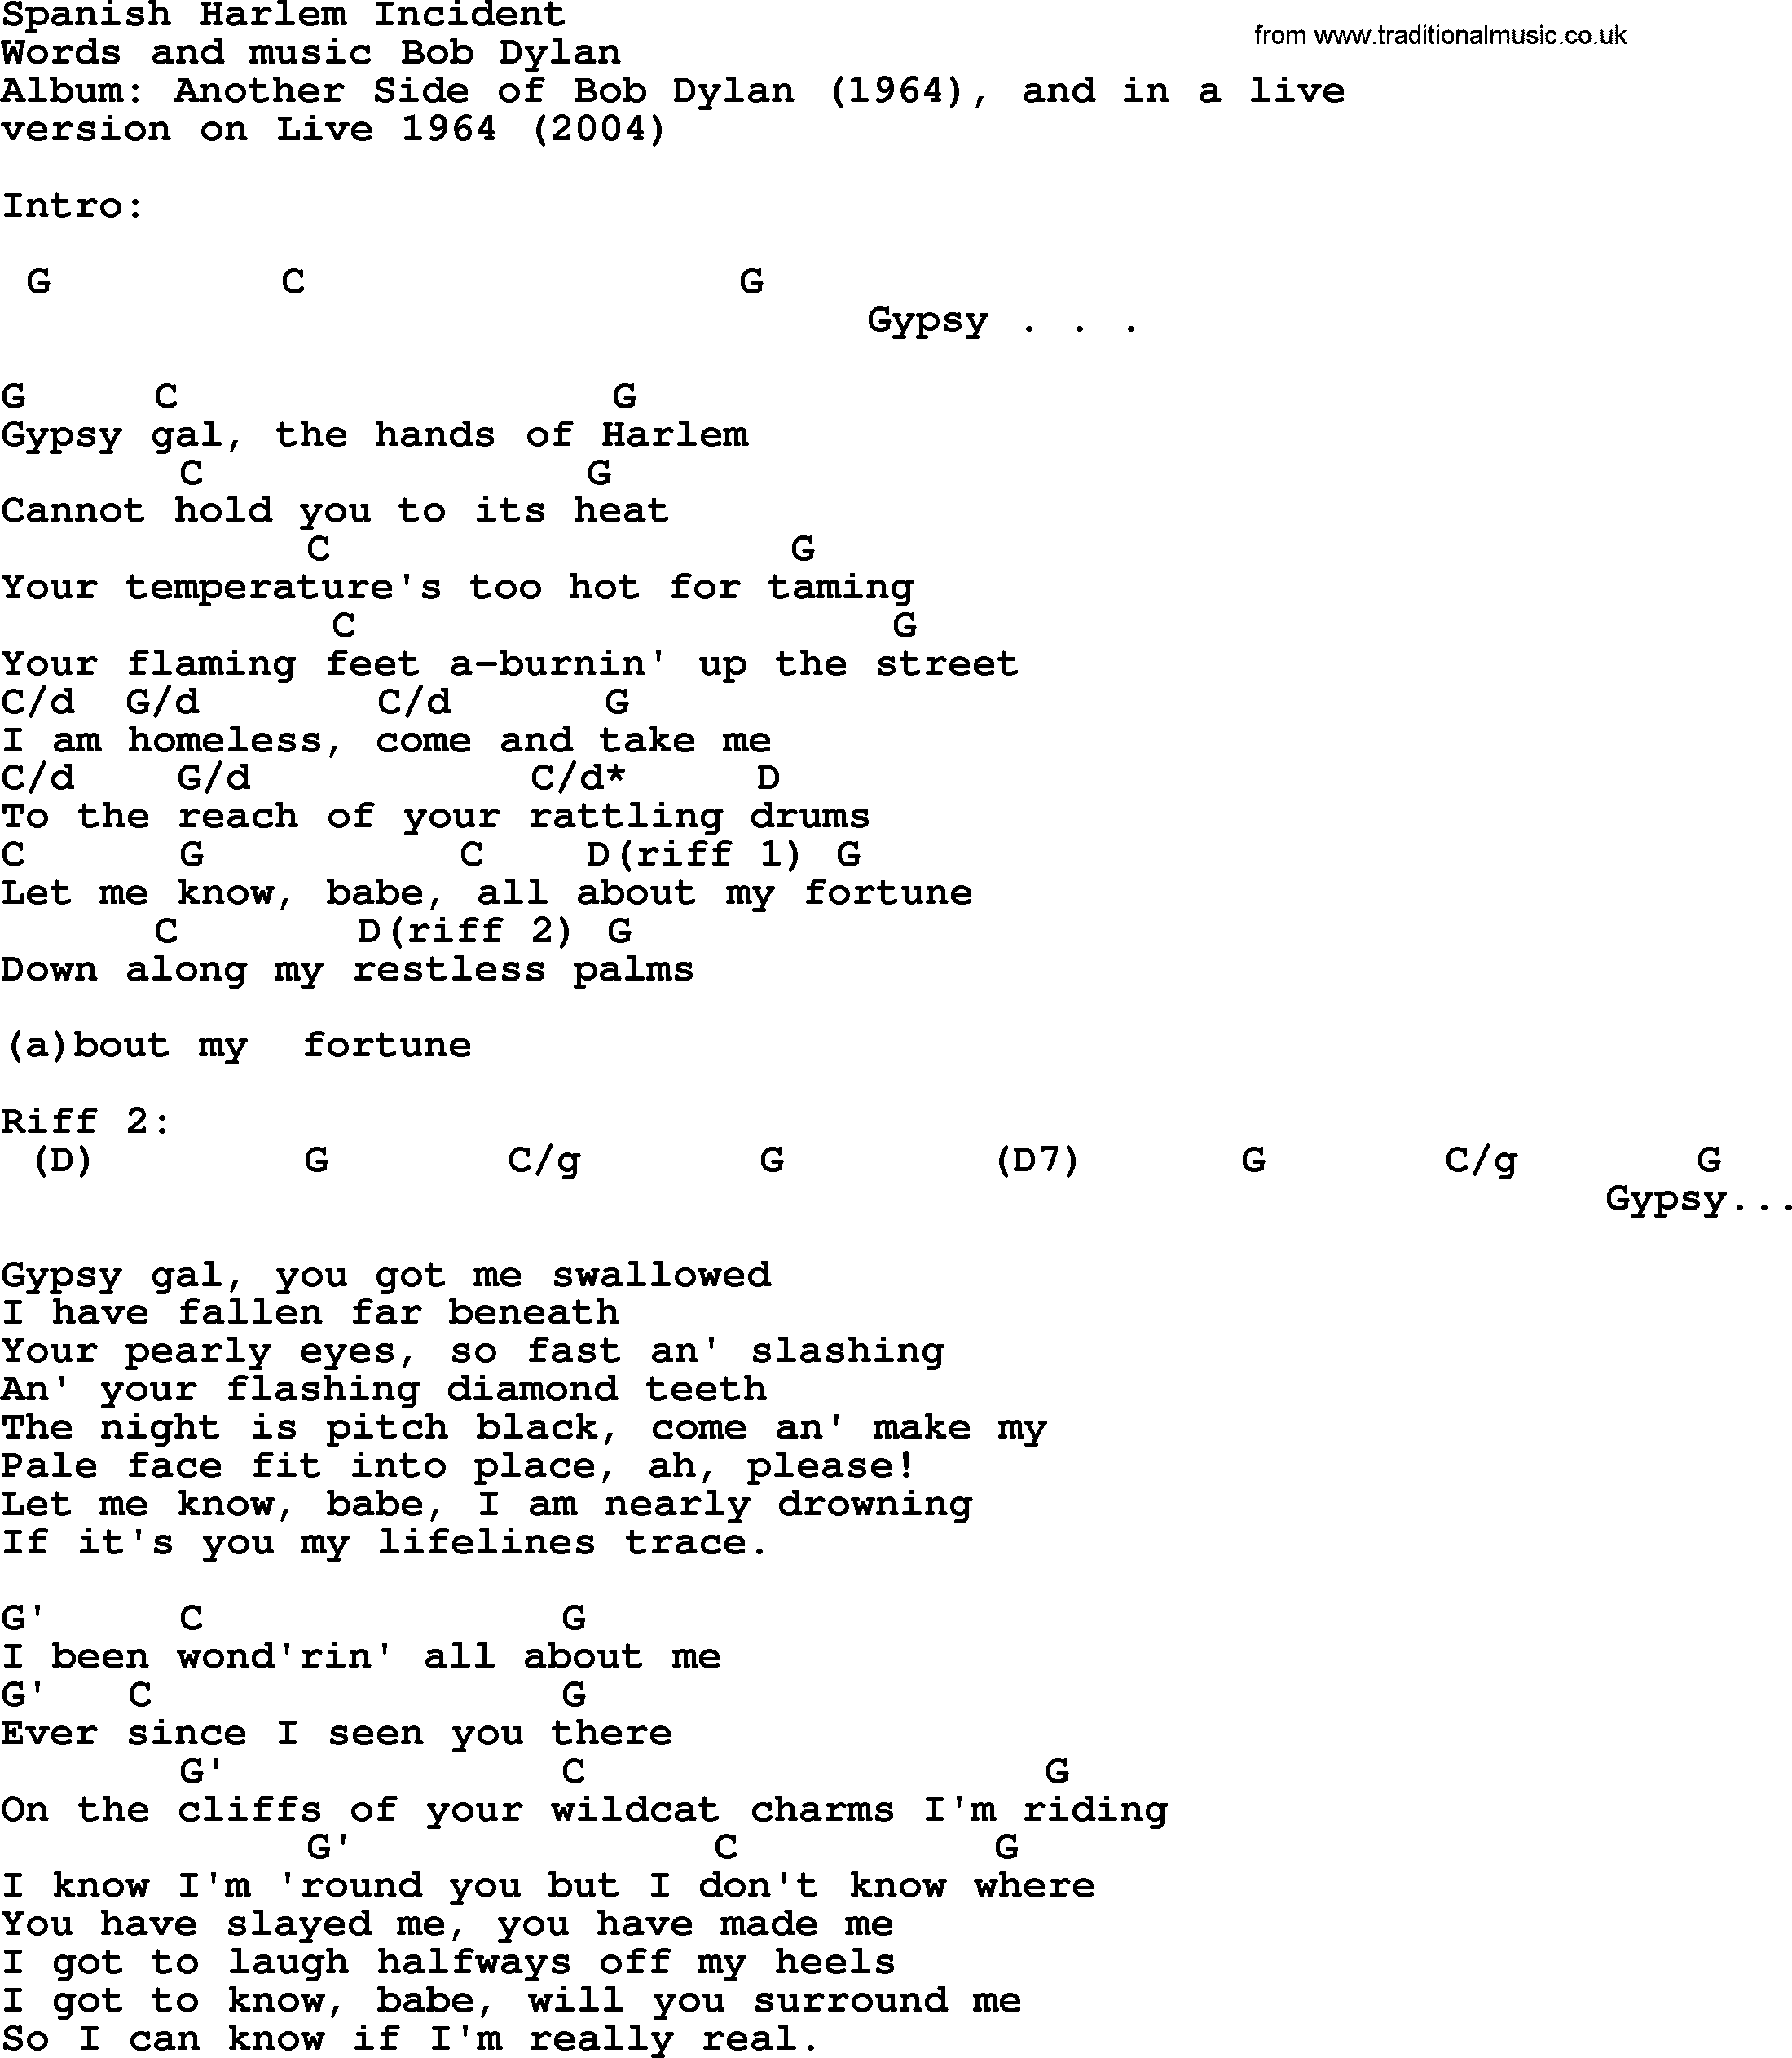 Bob Dylan song, lyrics with chords - Spanish Harlem Incident